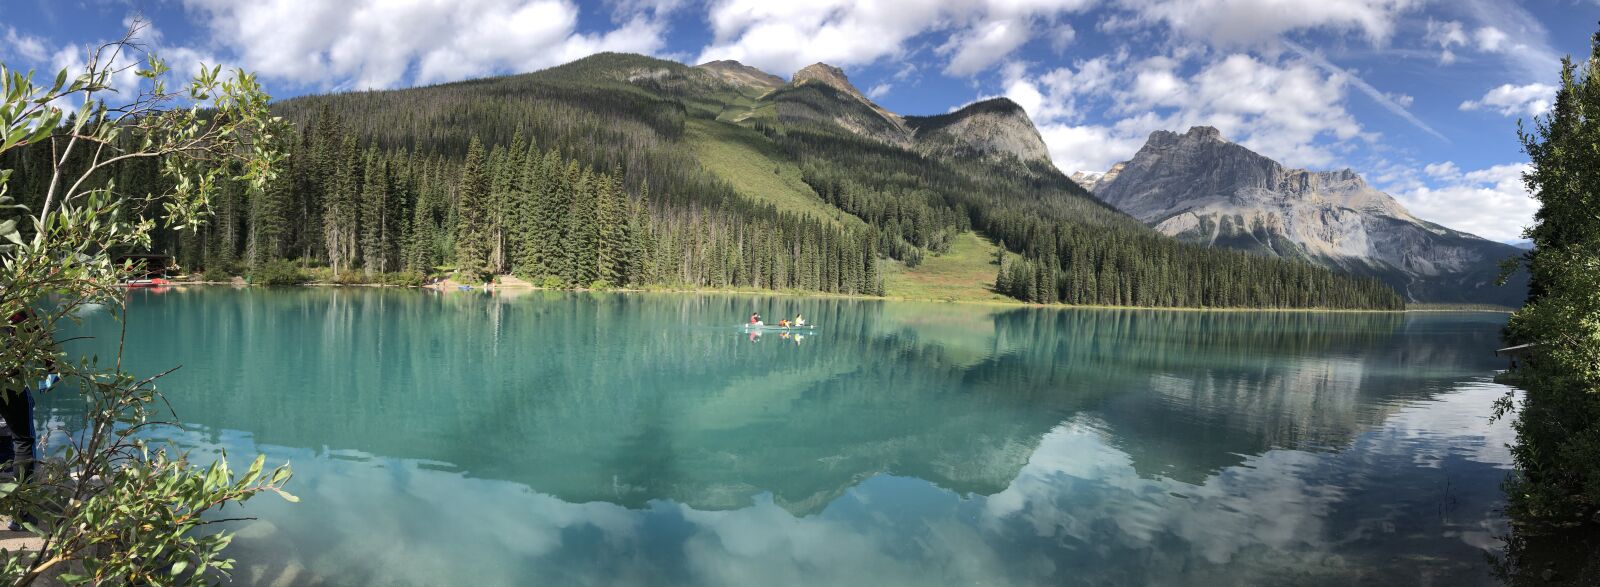 Apple iPhone X sample photo. Emerald lake, bc, canada photography